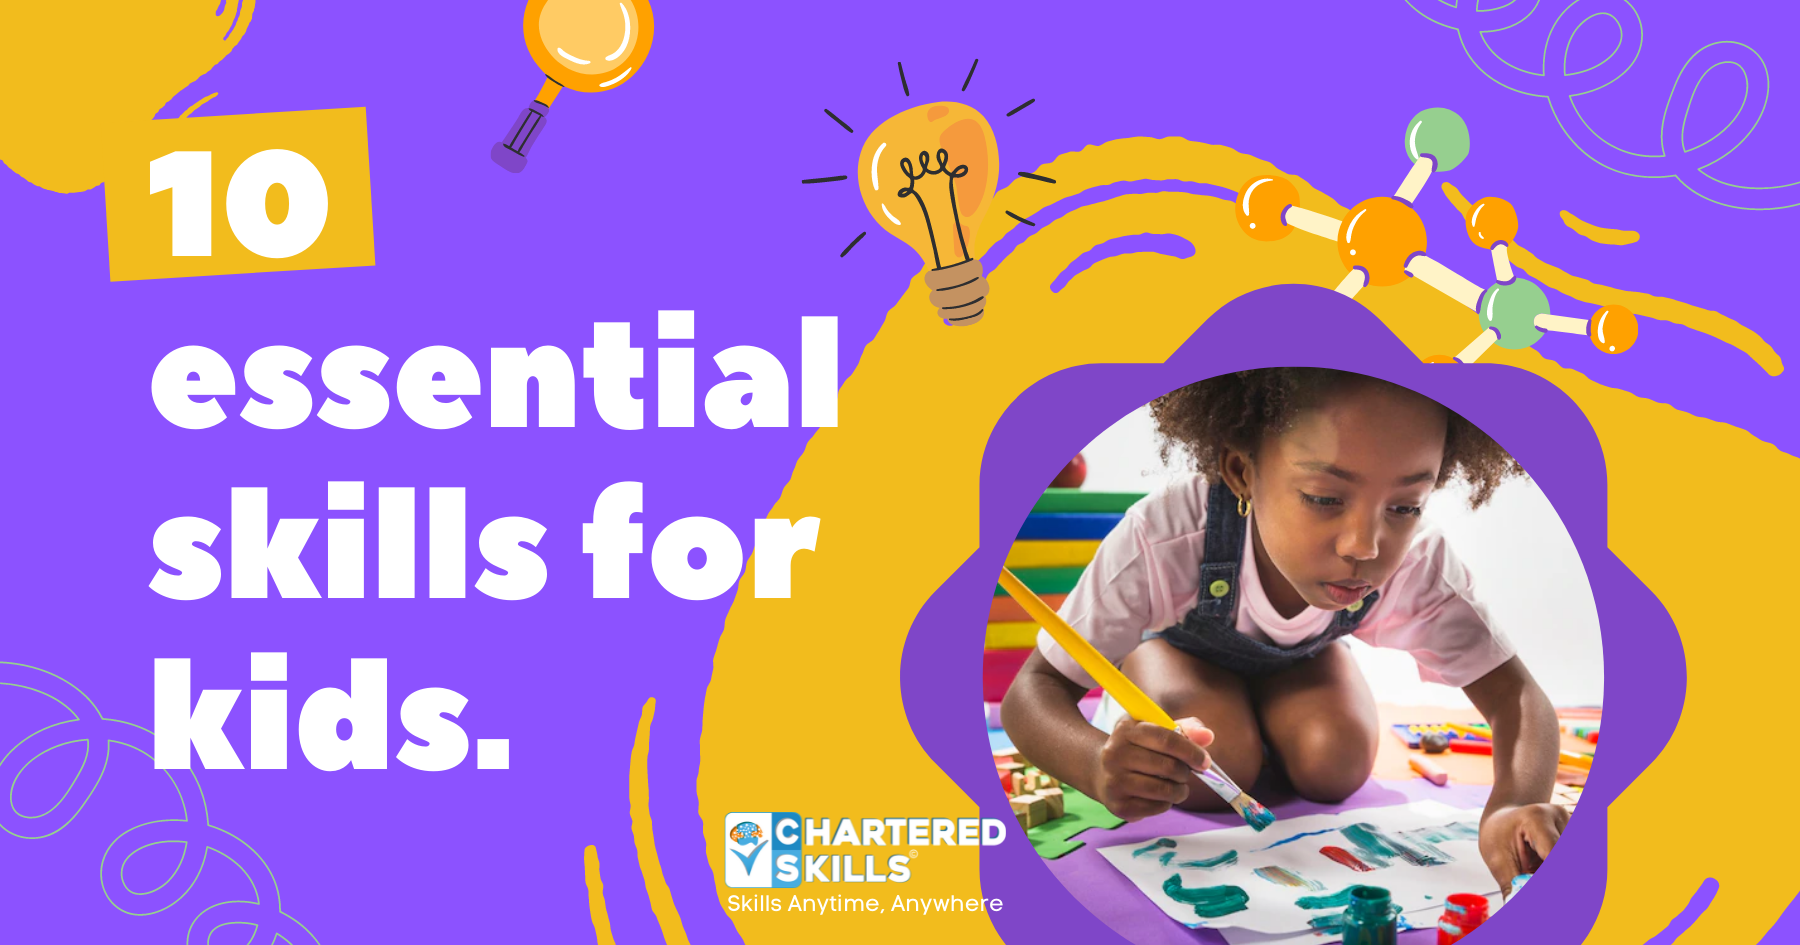 10 essential skills for kids